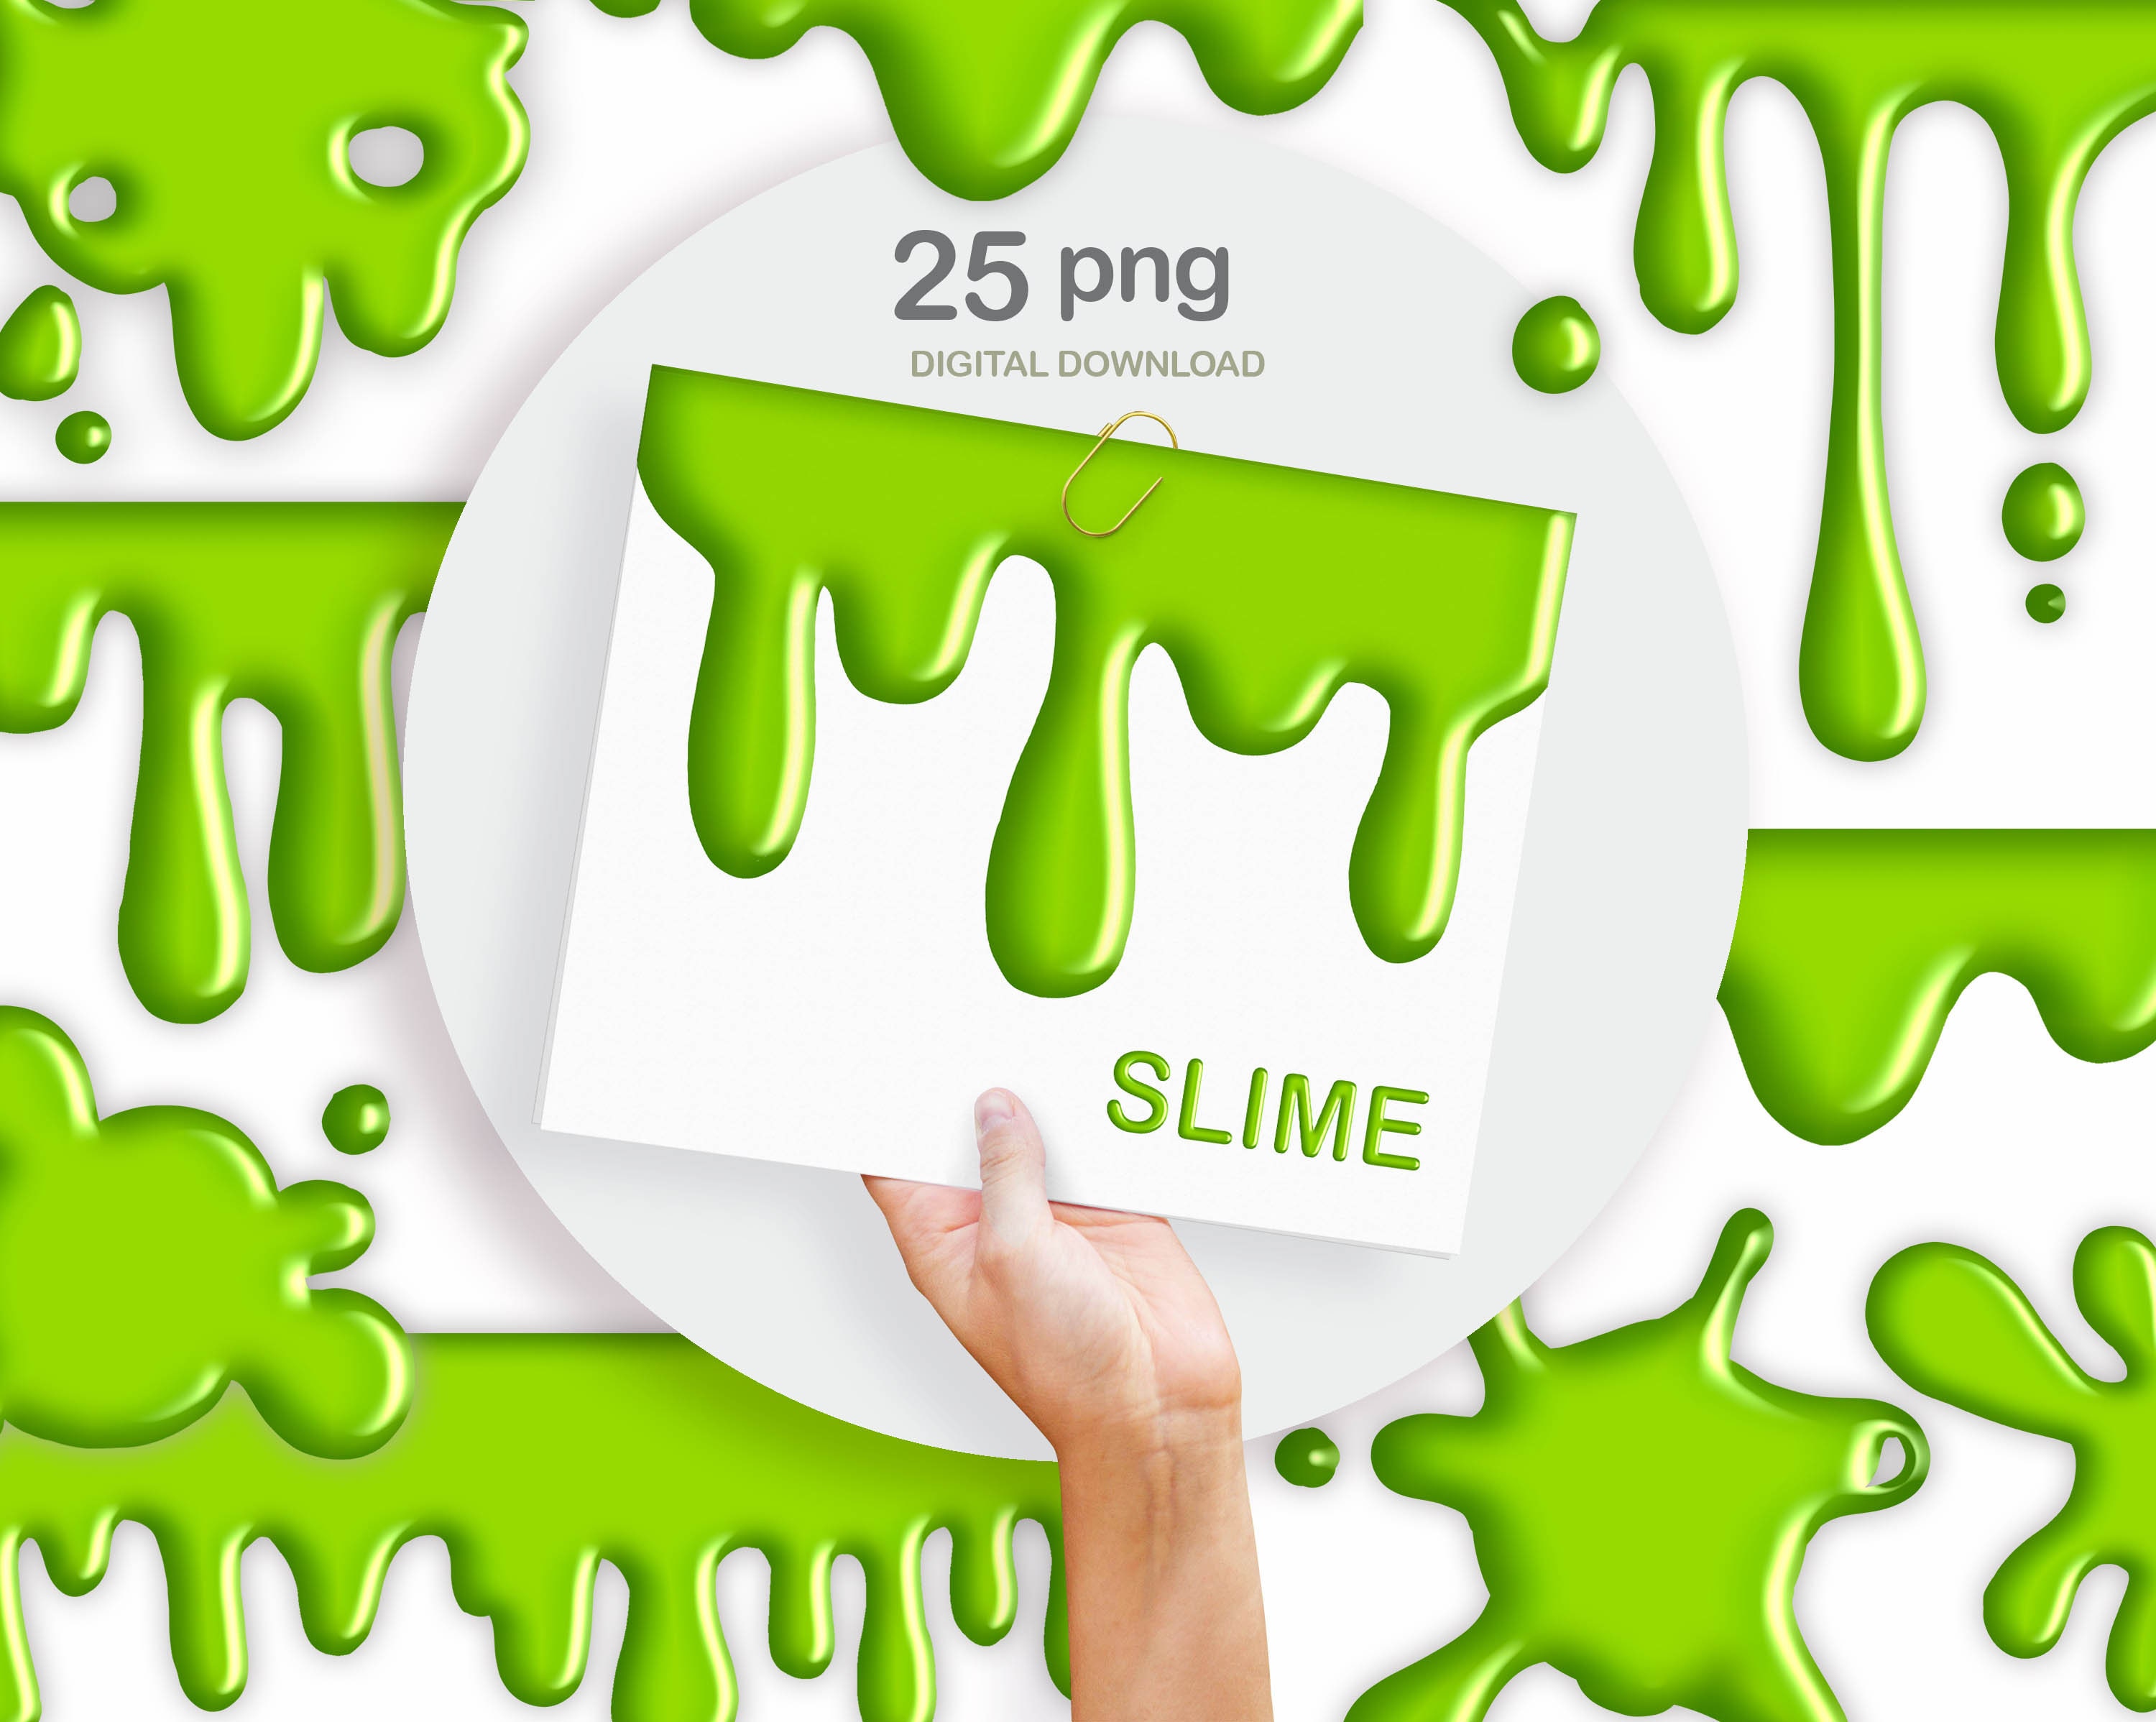 Food Slime Kits, Pancake Slime, Slime, Slime Shop, Diy Clay Butter Slime,  Diy Slime Kit, Slime for Kids, Activity Kits for Kids,butter Slime 